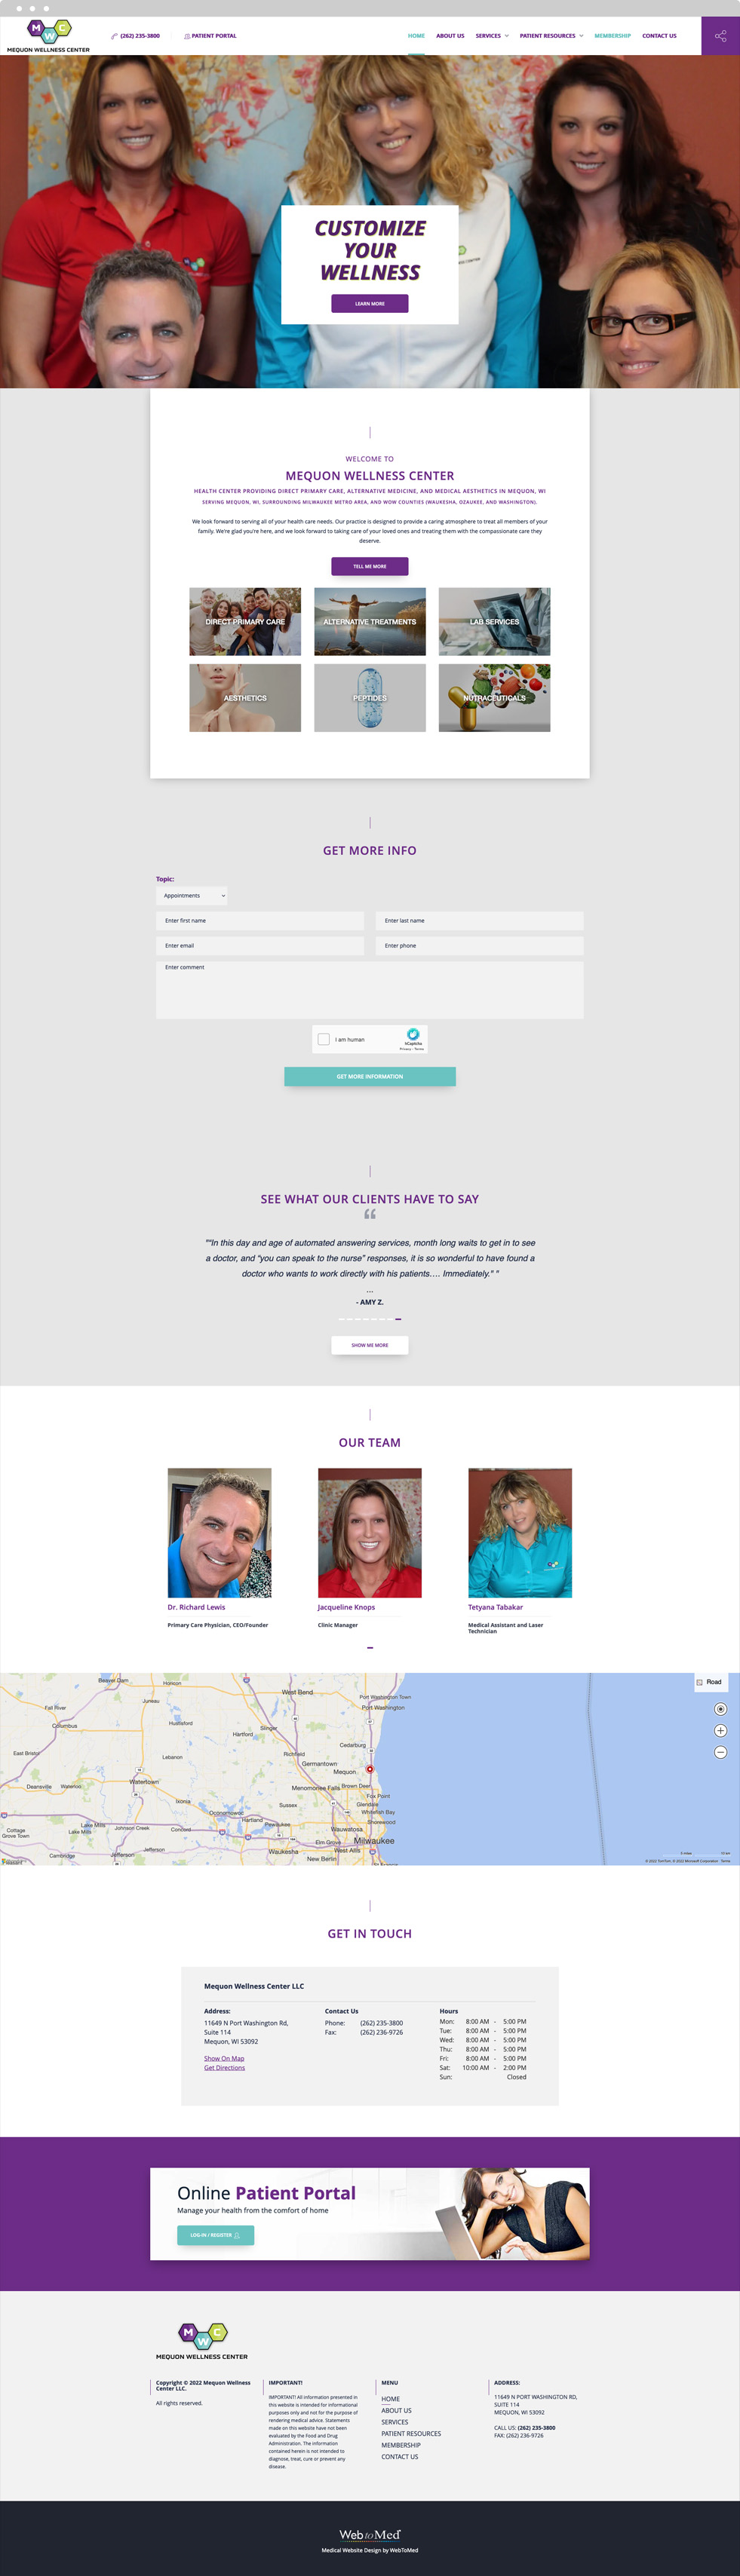 Wellness Website Design - Mequon Wellness Center - Homepage